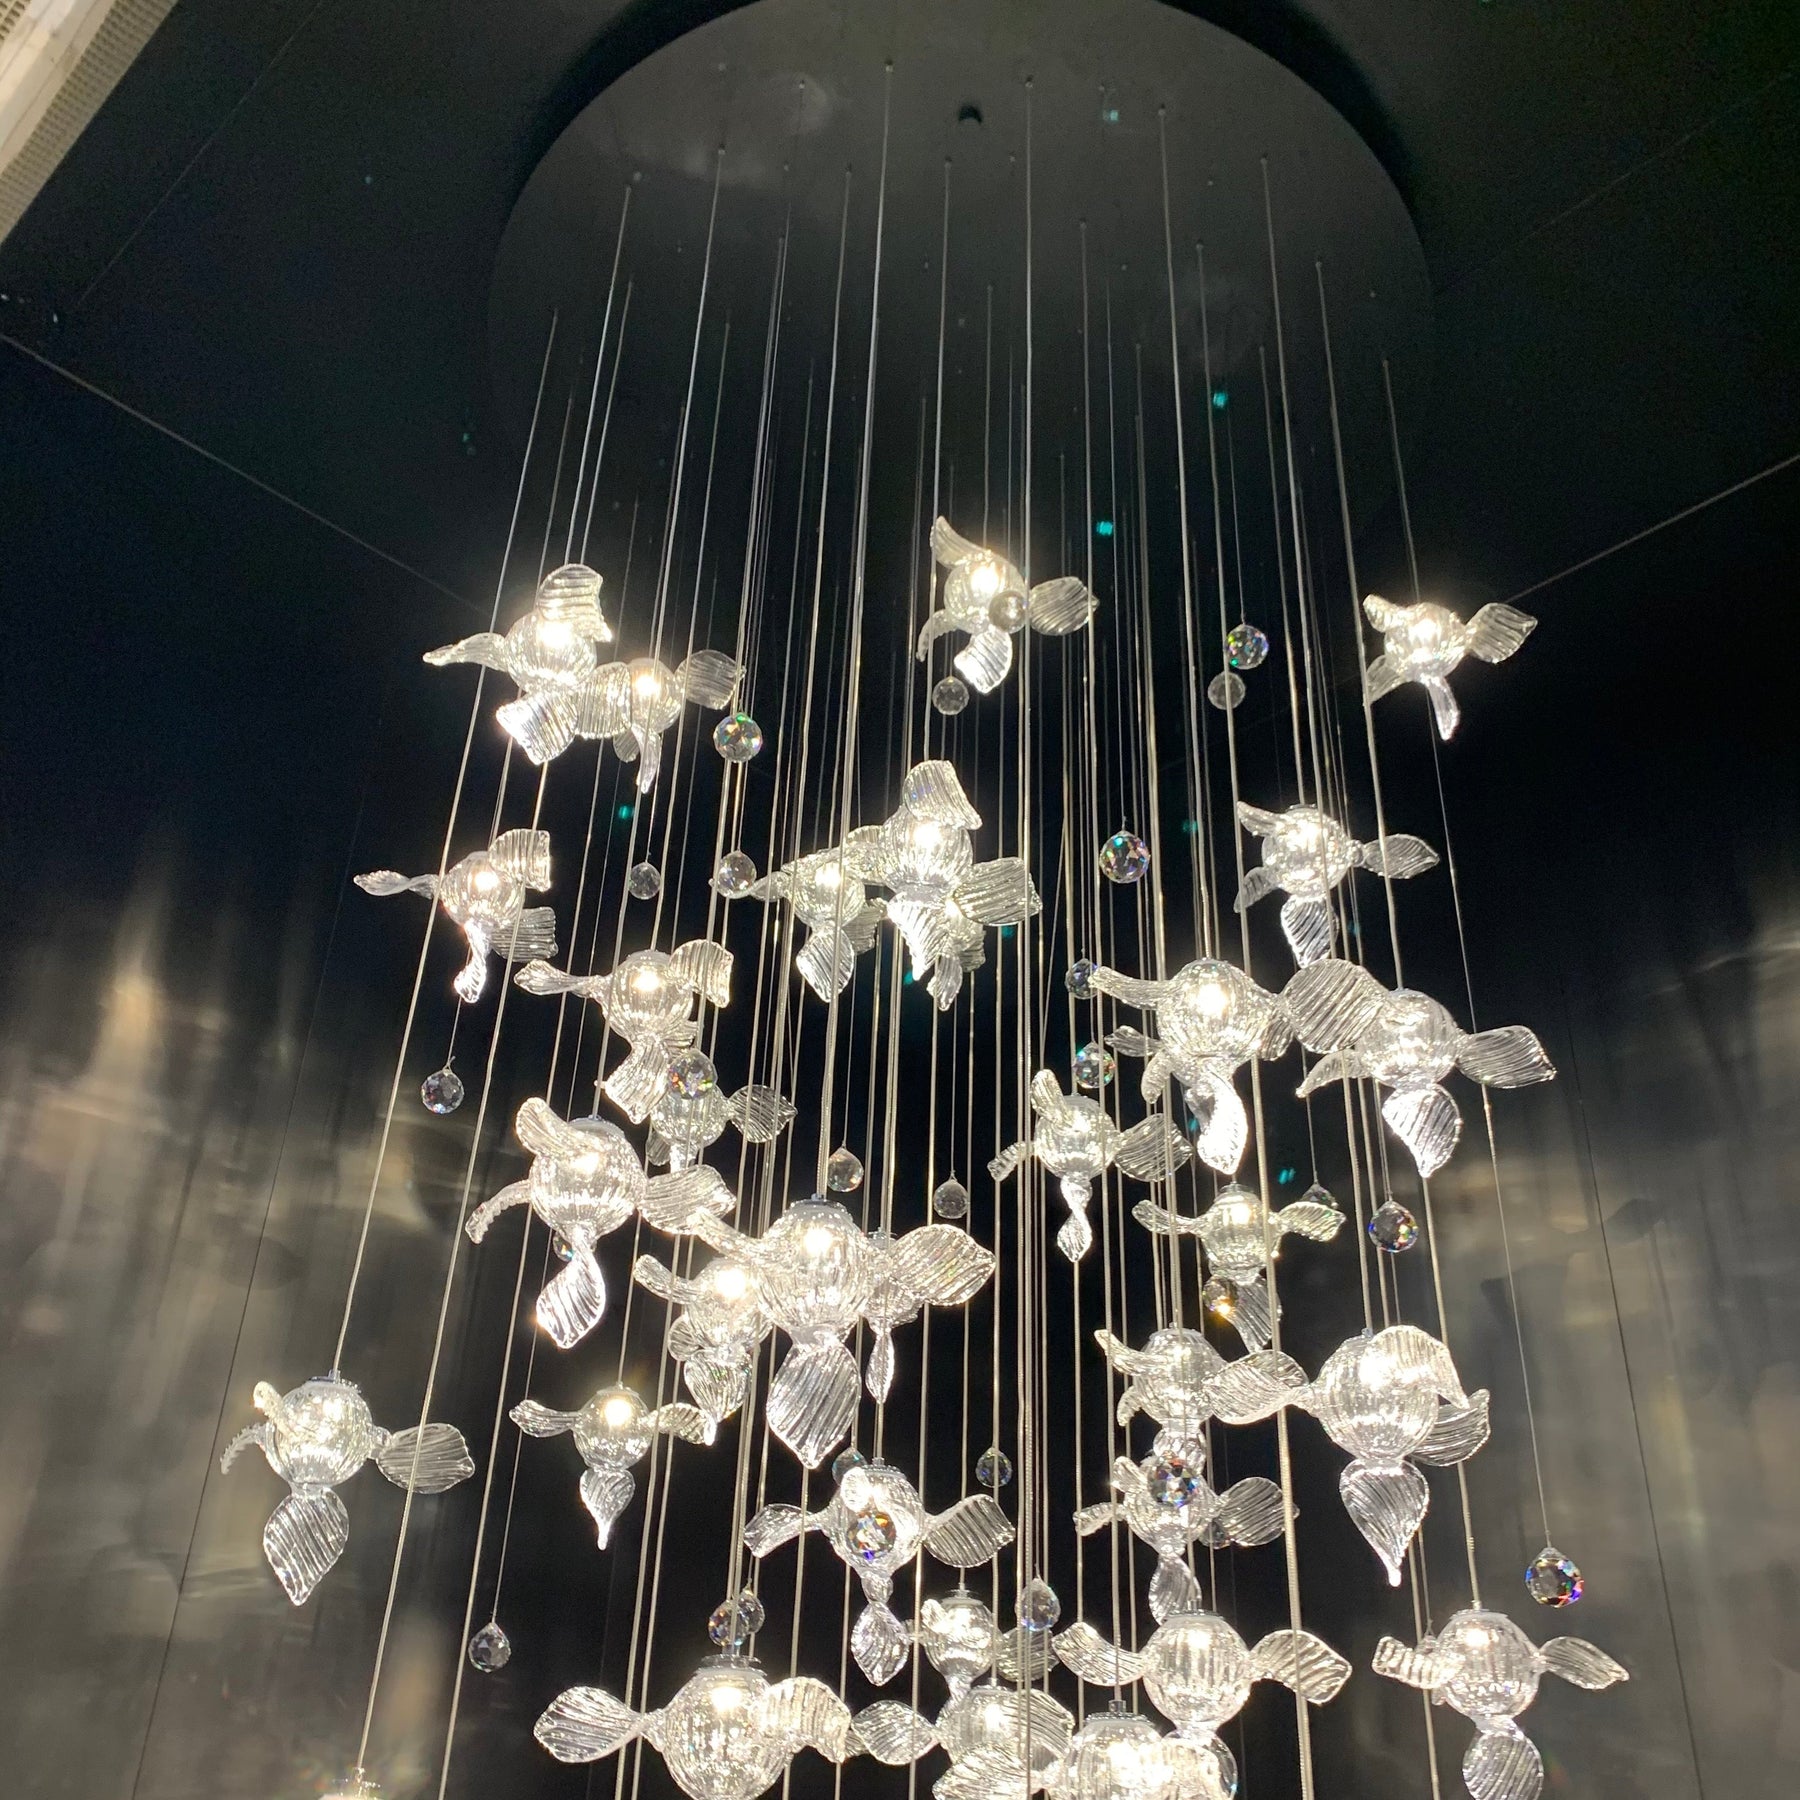 New Art Design Propeller-like Crystal Chandelier for Staircase/Villa/Foyer/High-ceiling Space